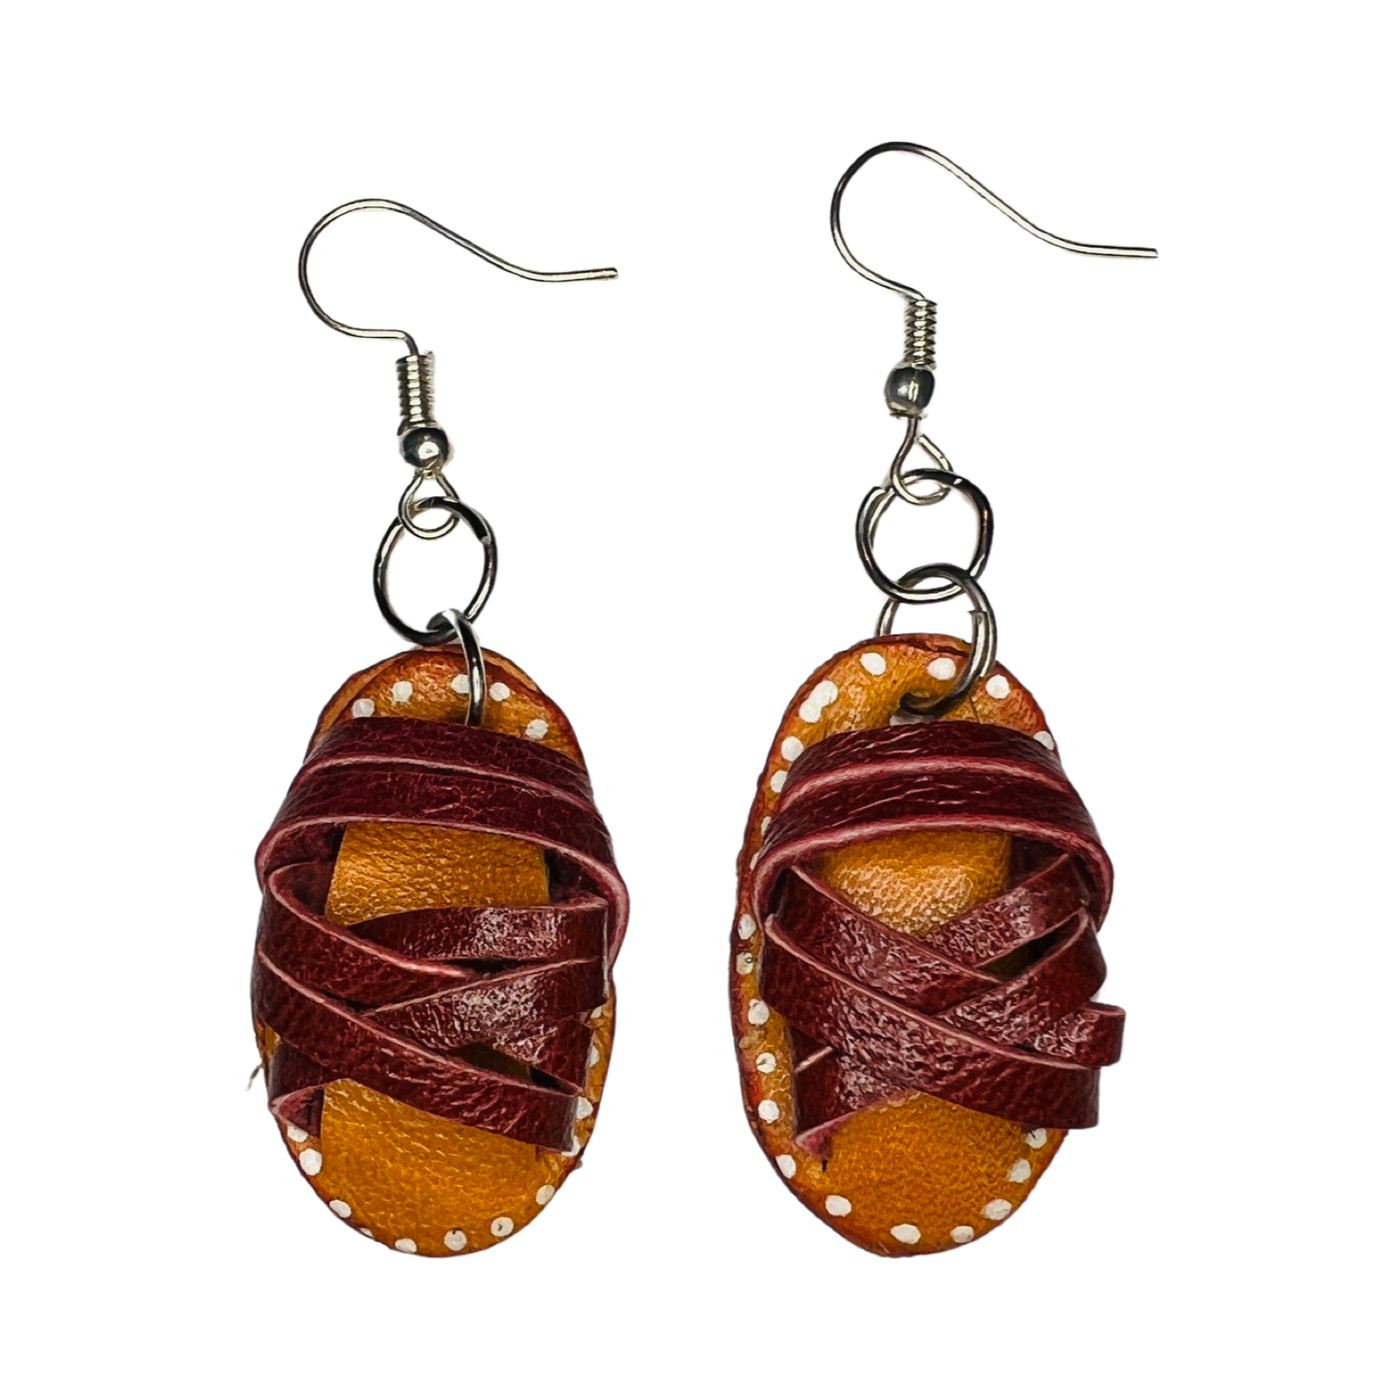 A set of plum leather huaraches (Sandal) earrings.